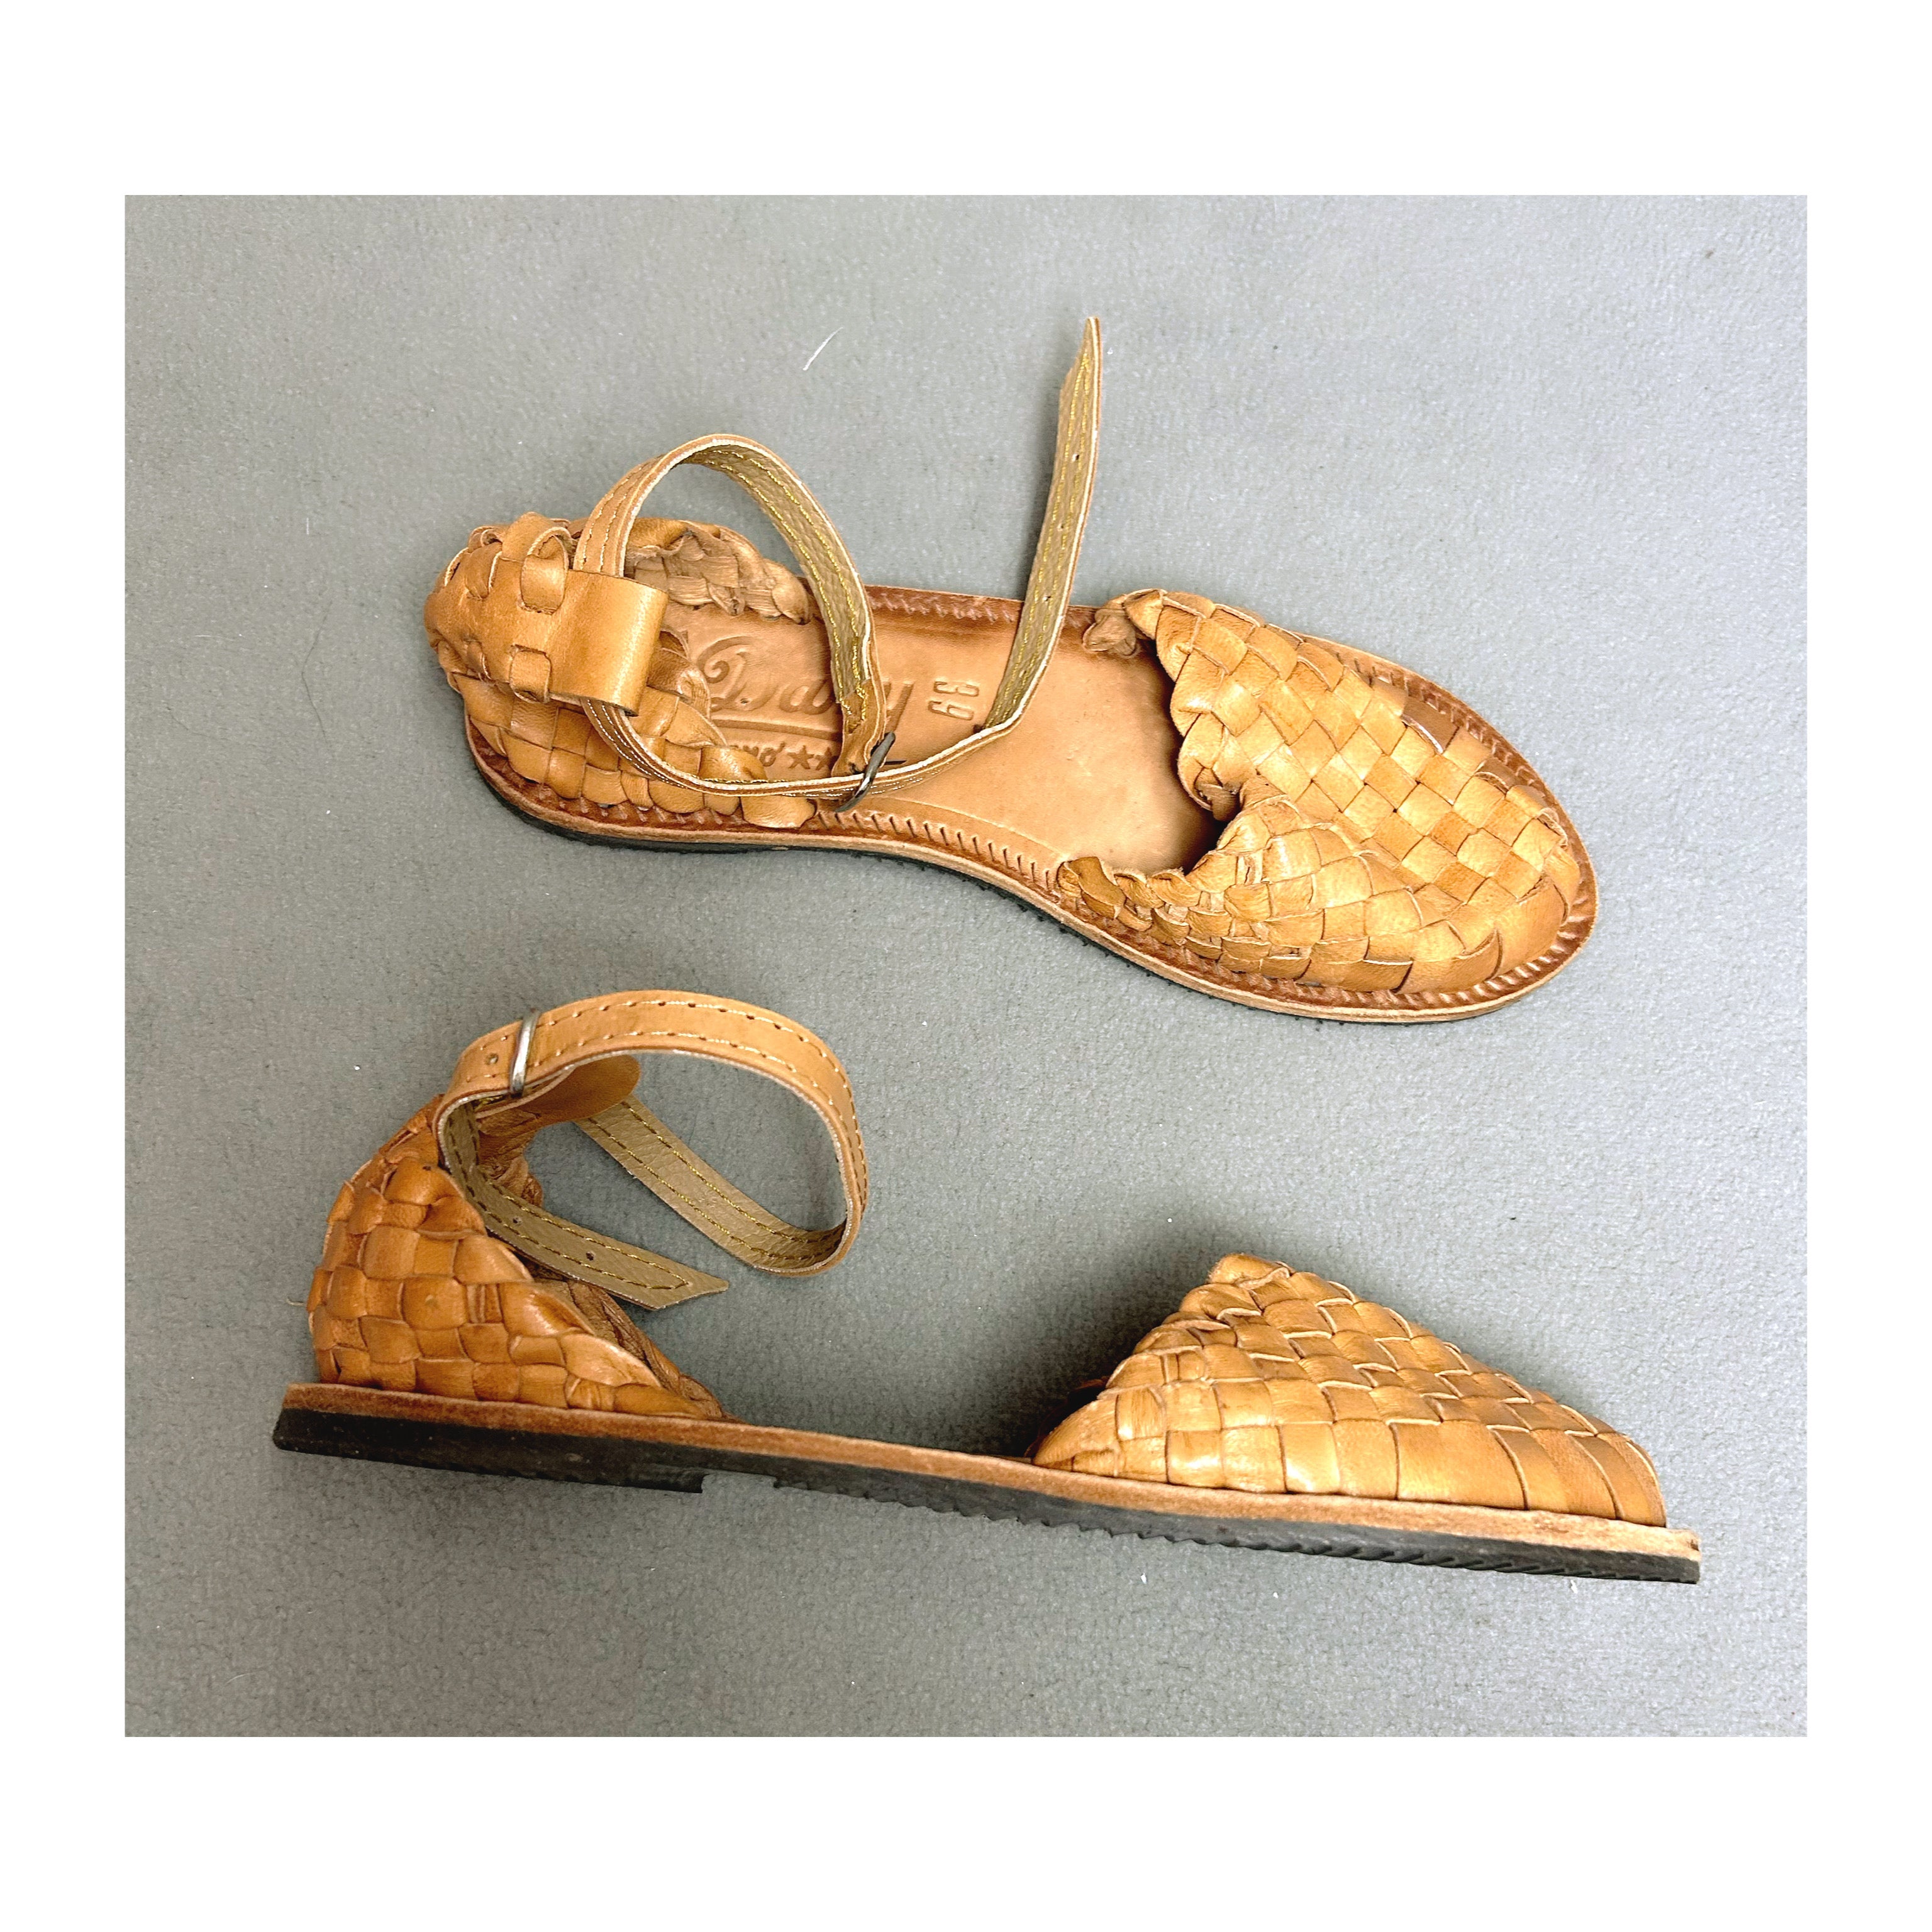 El Dany tan leather huarache sandals, size 39